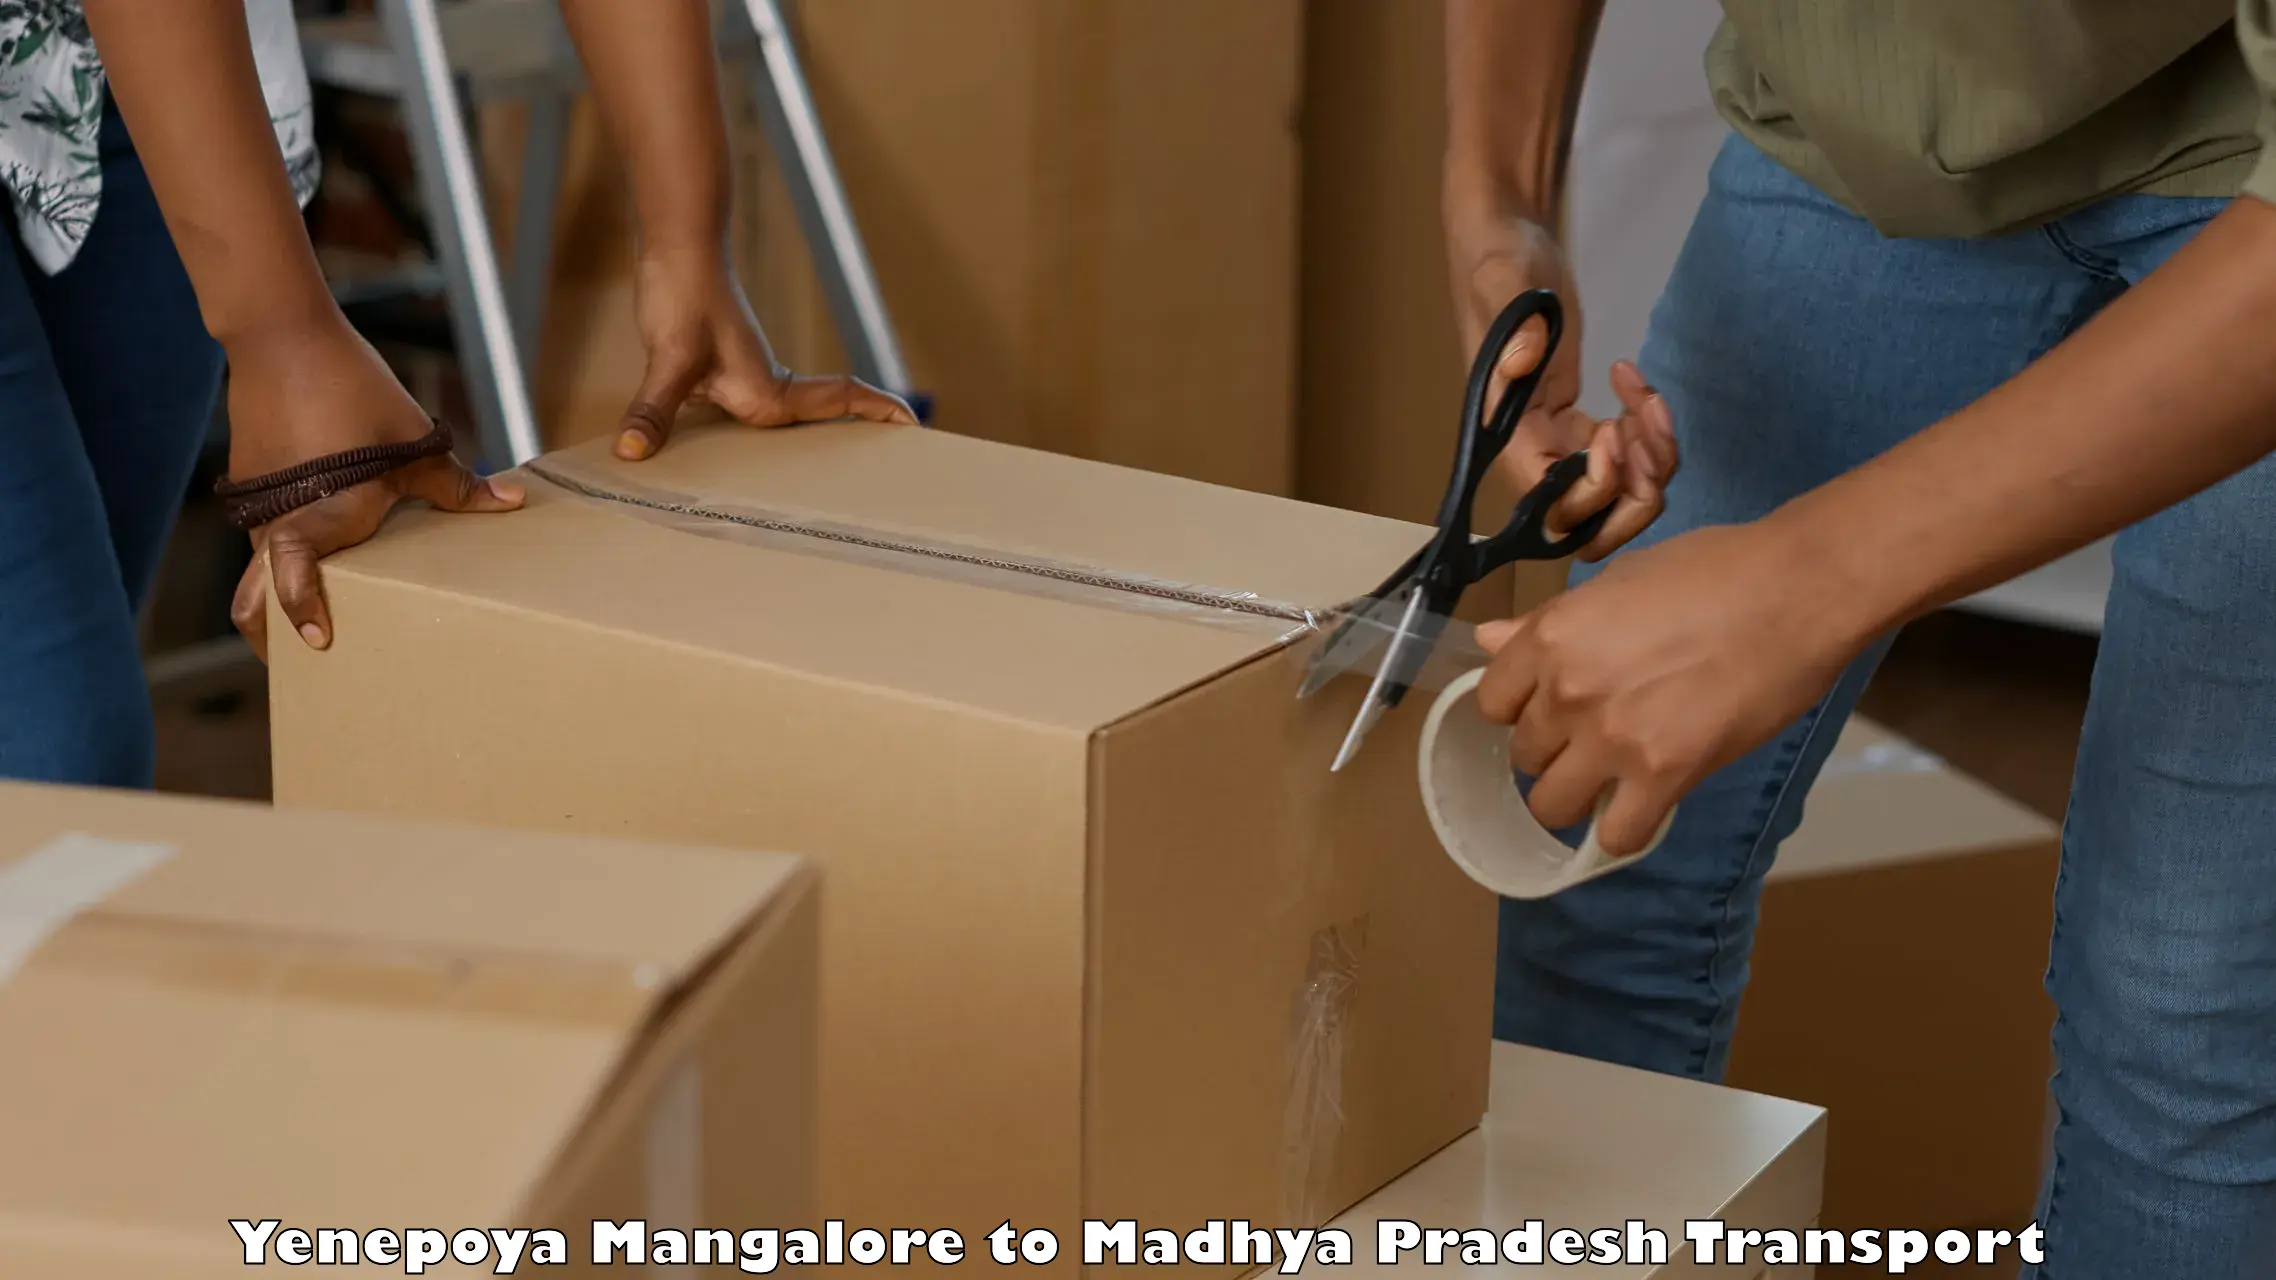 Online transport service Yenepoya Mangalore to Madhya Pradesh